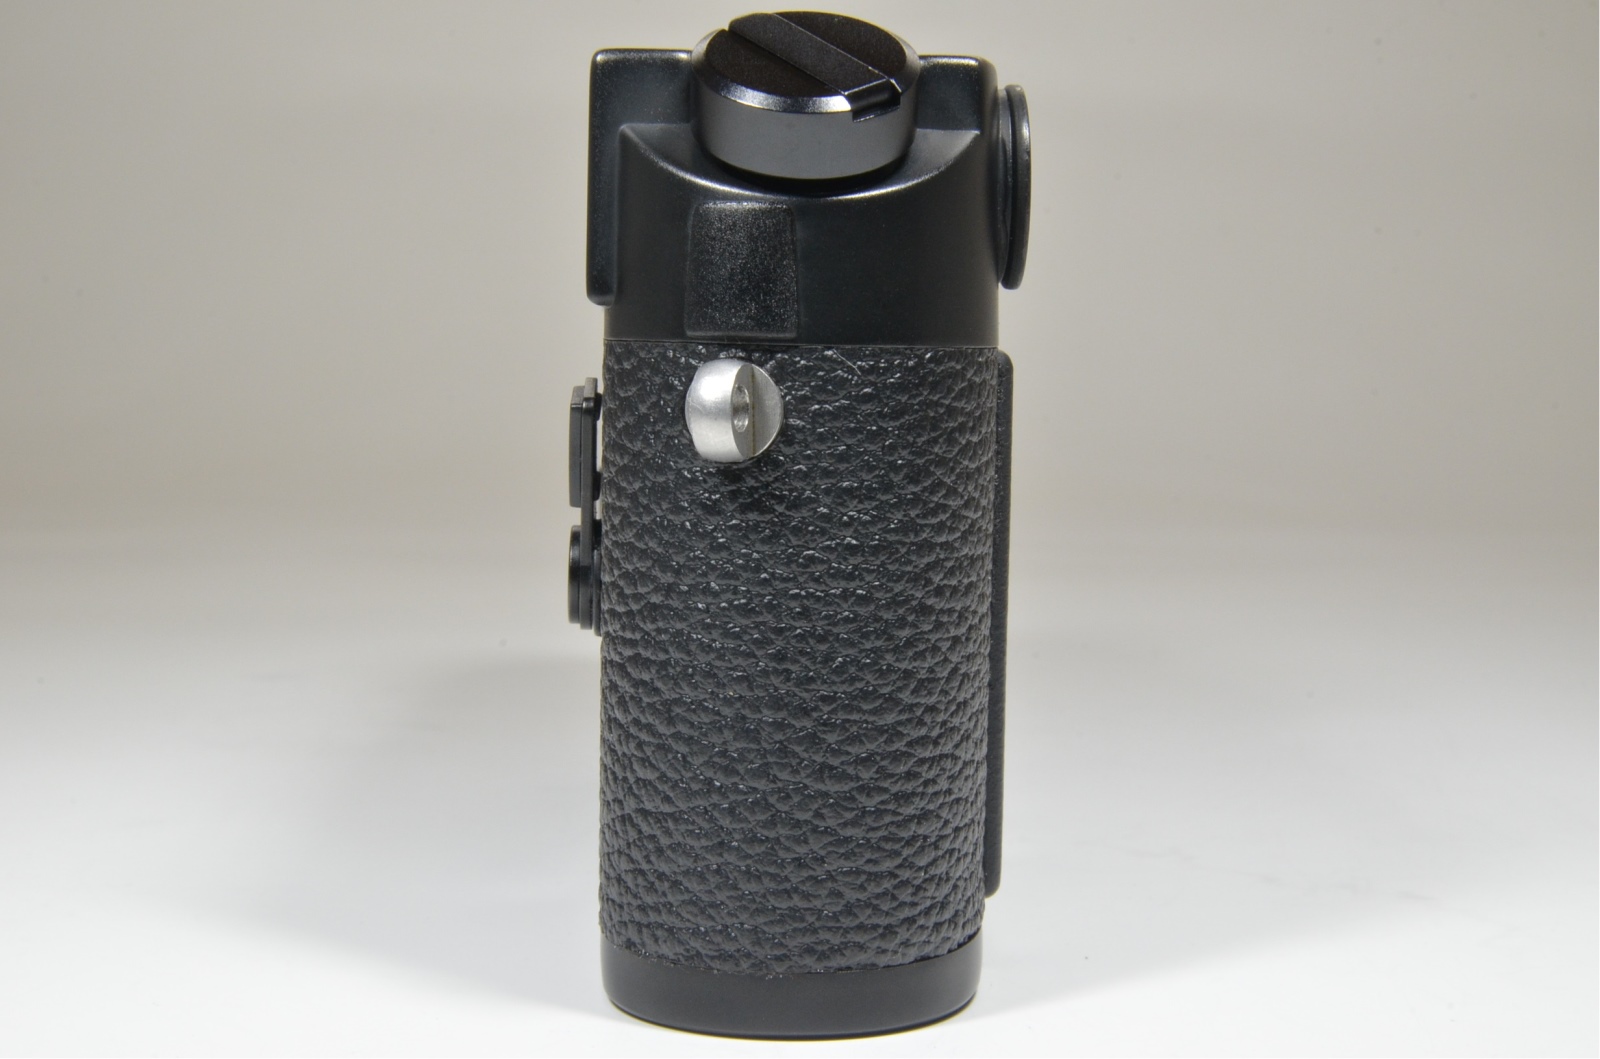 leica m6 0.72 black rangefinder serial no.1779265 year 1990 with case